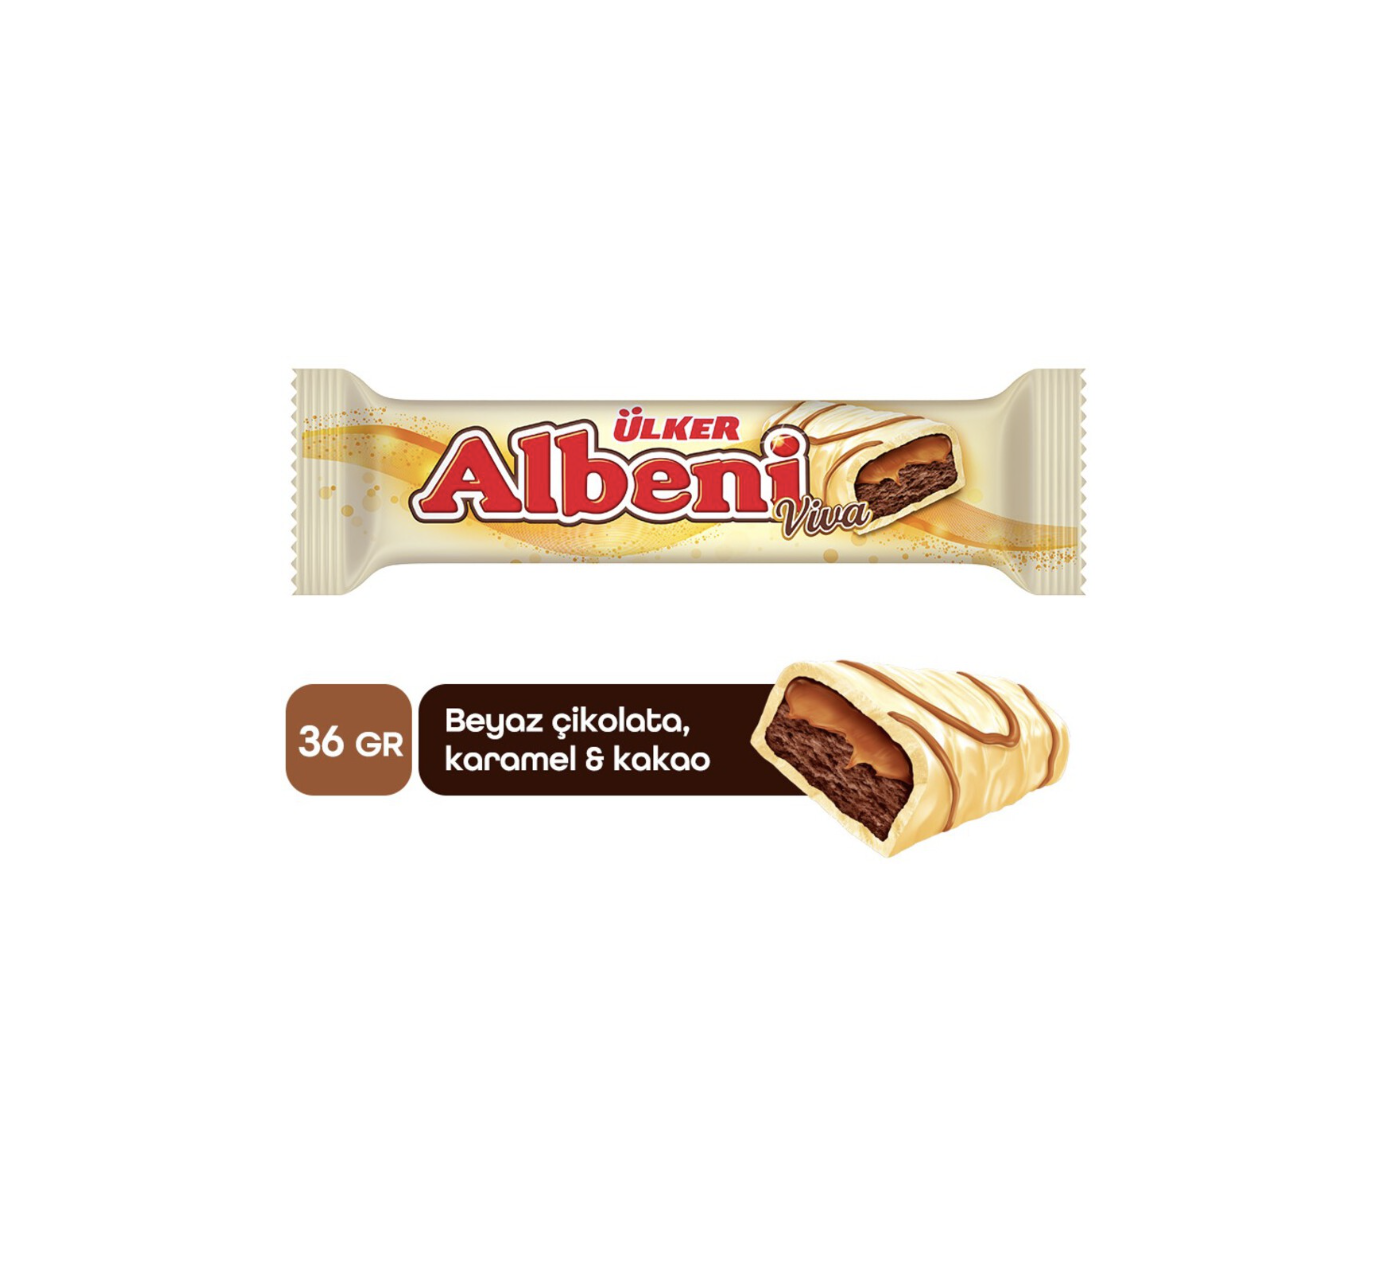 Ülker Albeni White Chocolate, Caramel and Cacao 36 g / 1.26 oz